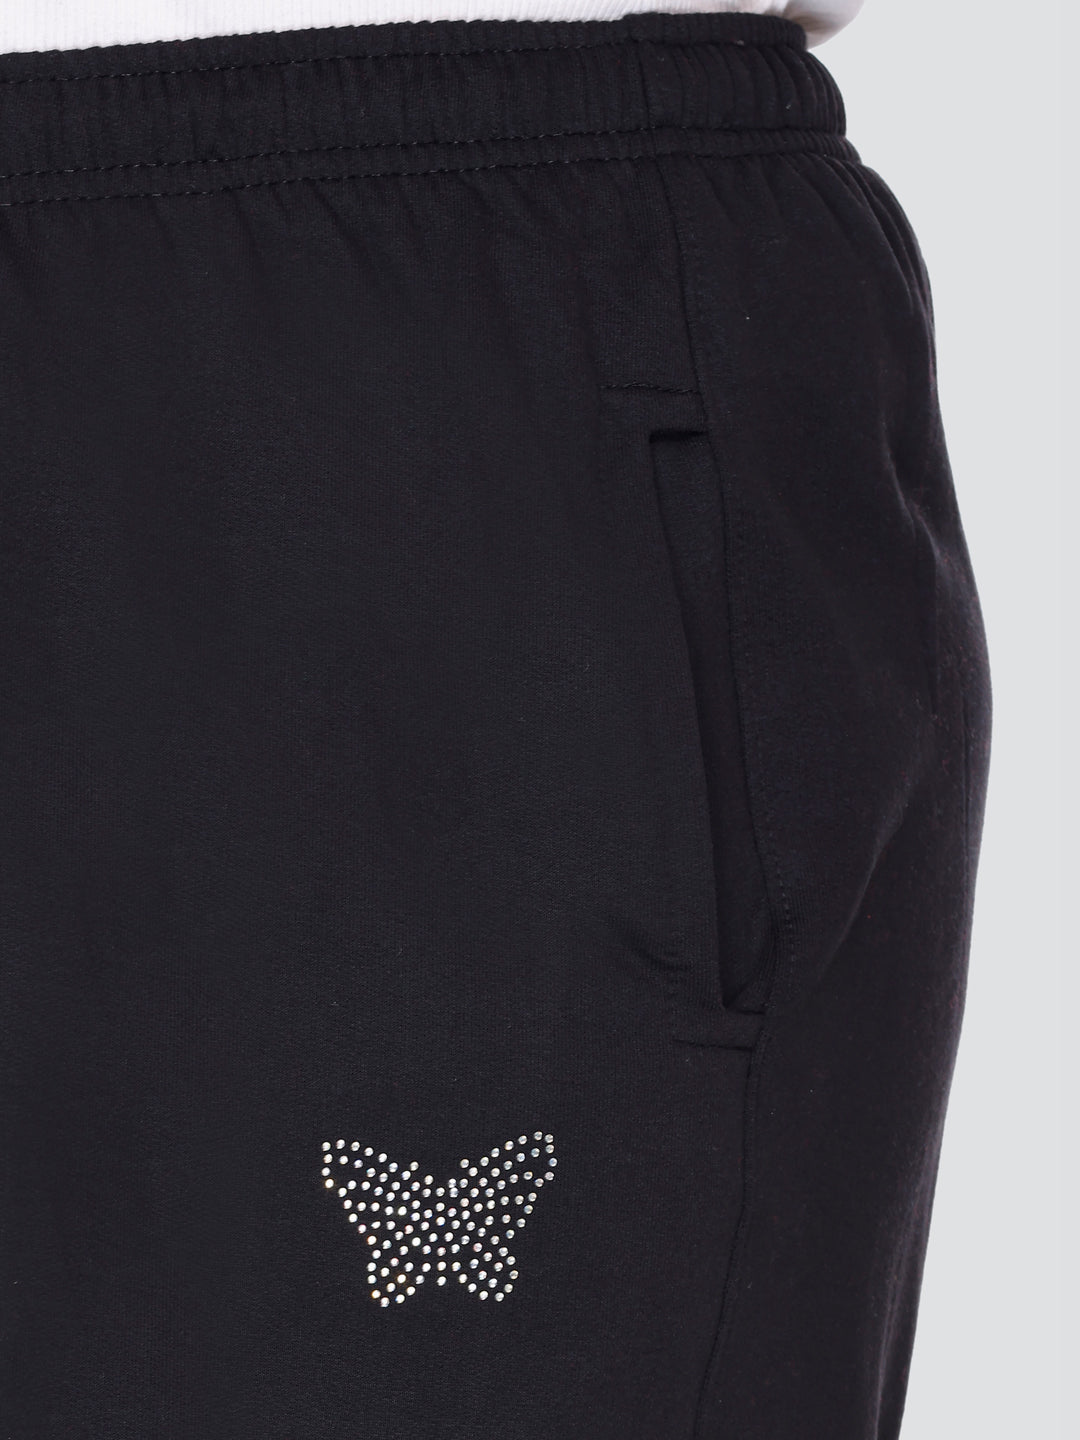 5 Under-$40 Fleece-lined Sweatpants You Can Shop on Amazon